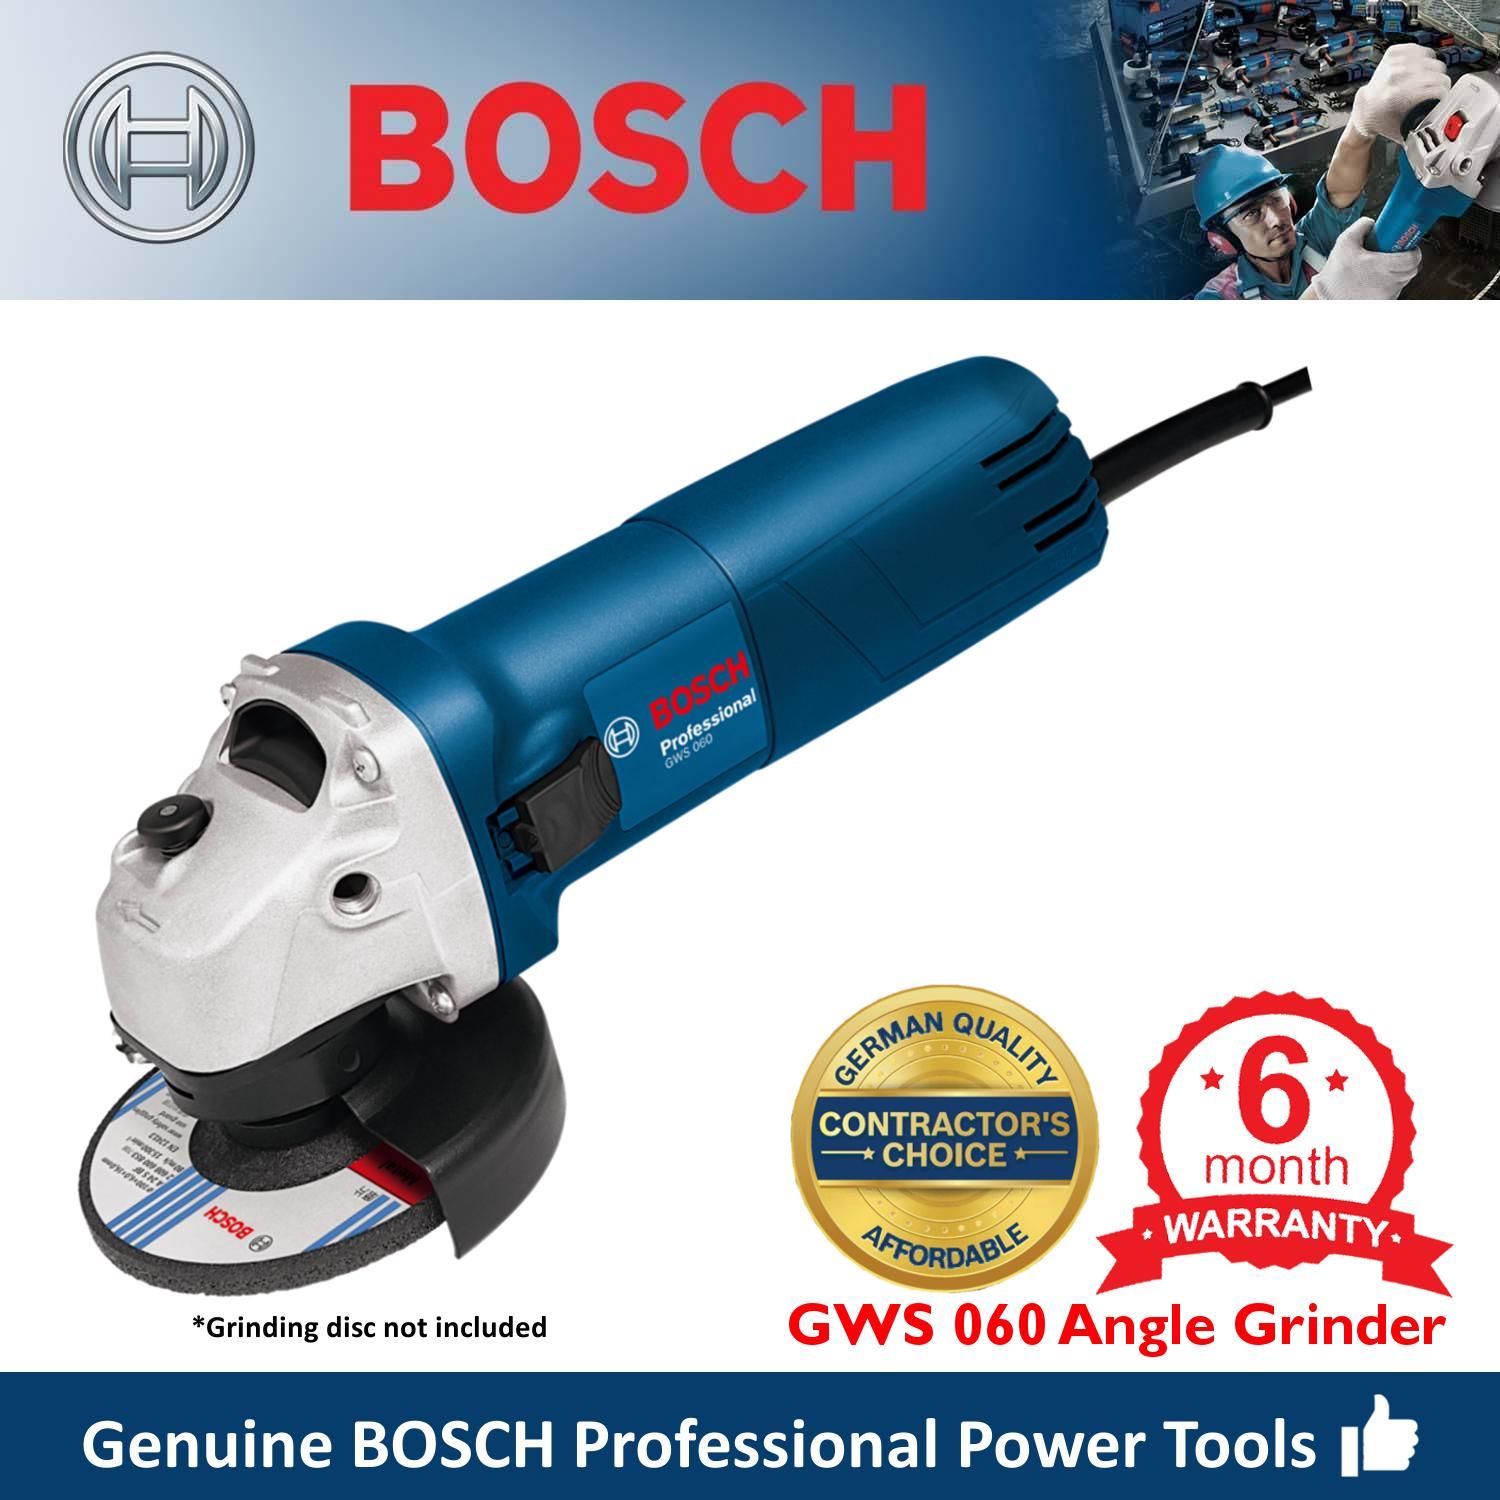 BOSCH เครื่องเจียร์ 4 นิ้ว BOSCH GWS 060 ของแท้100% พร้อมใบรับประกัน 6 เดือน จาก Bosch หินเจียร์บ๊อช